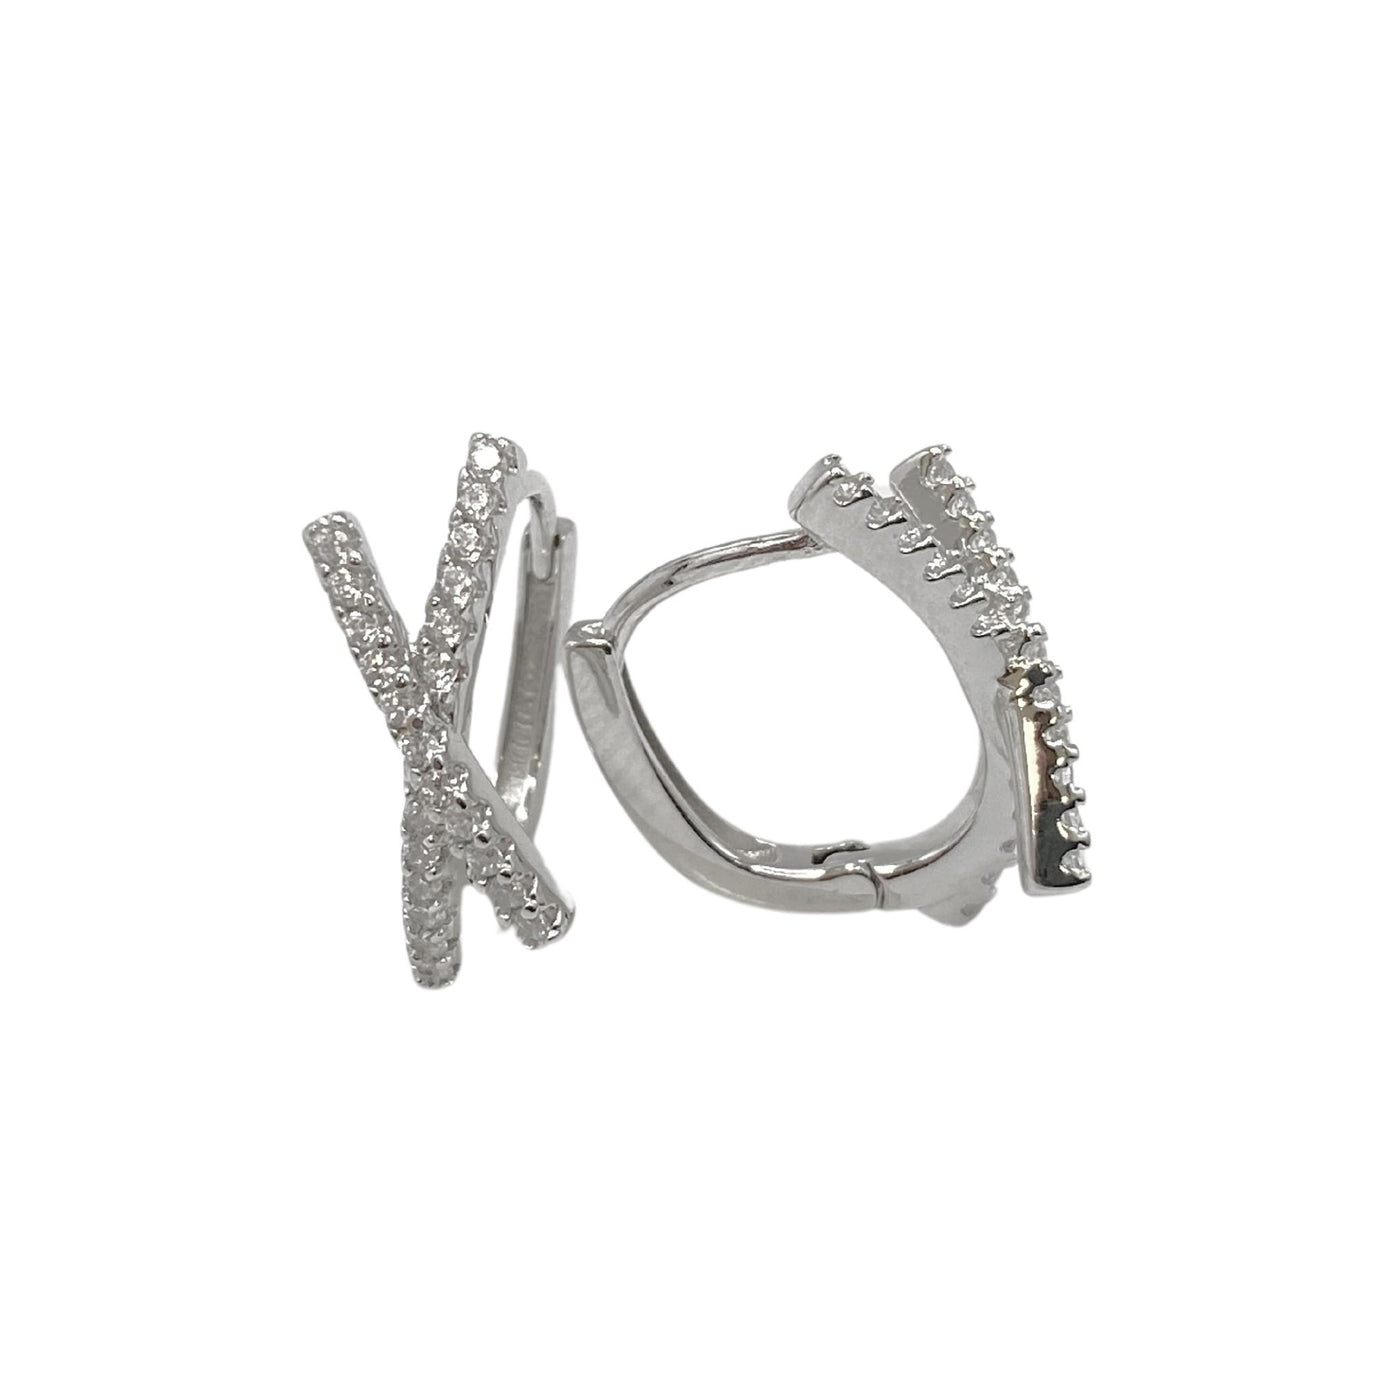 Silver hoop earrings with zirconia cross